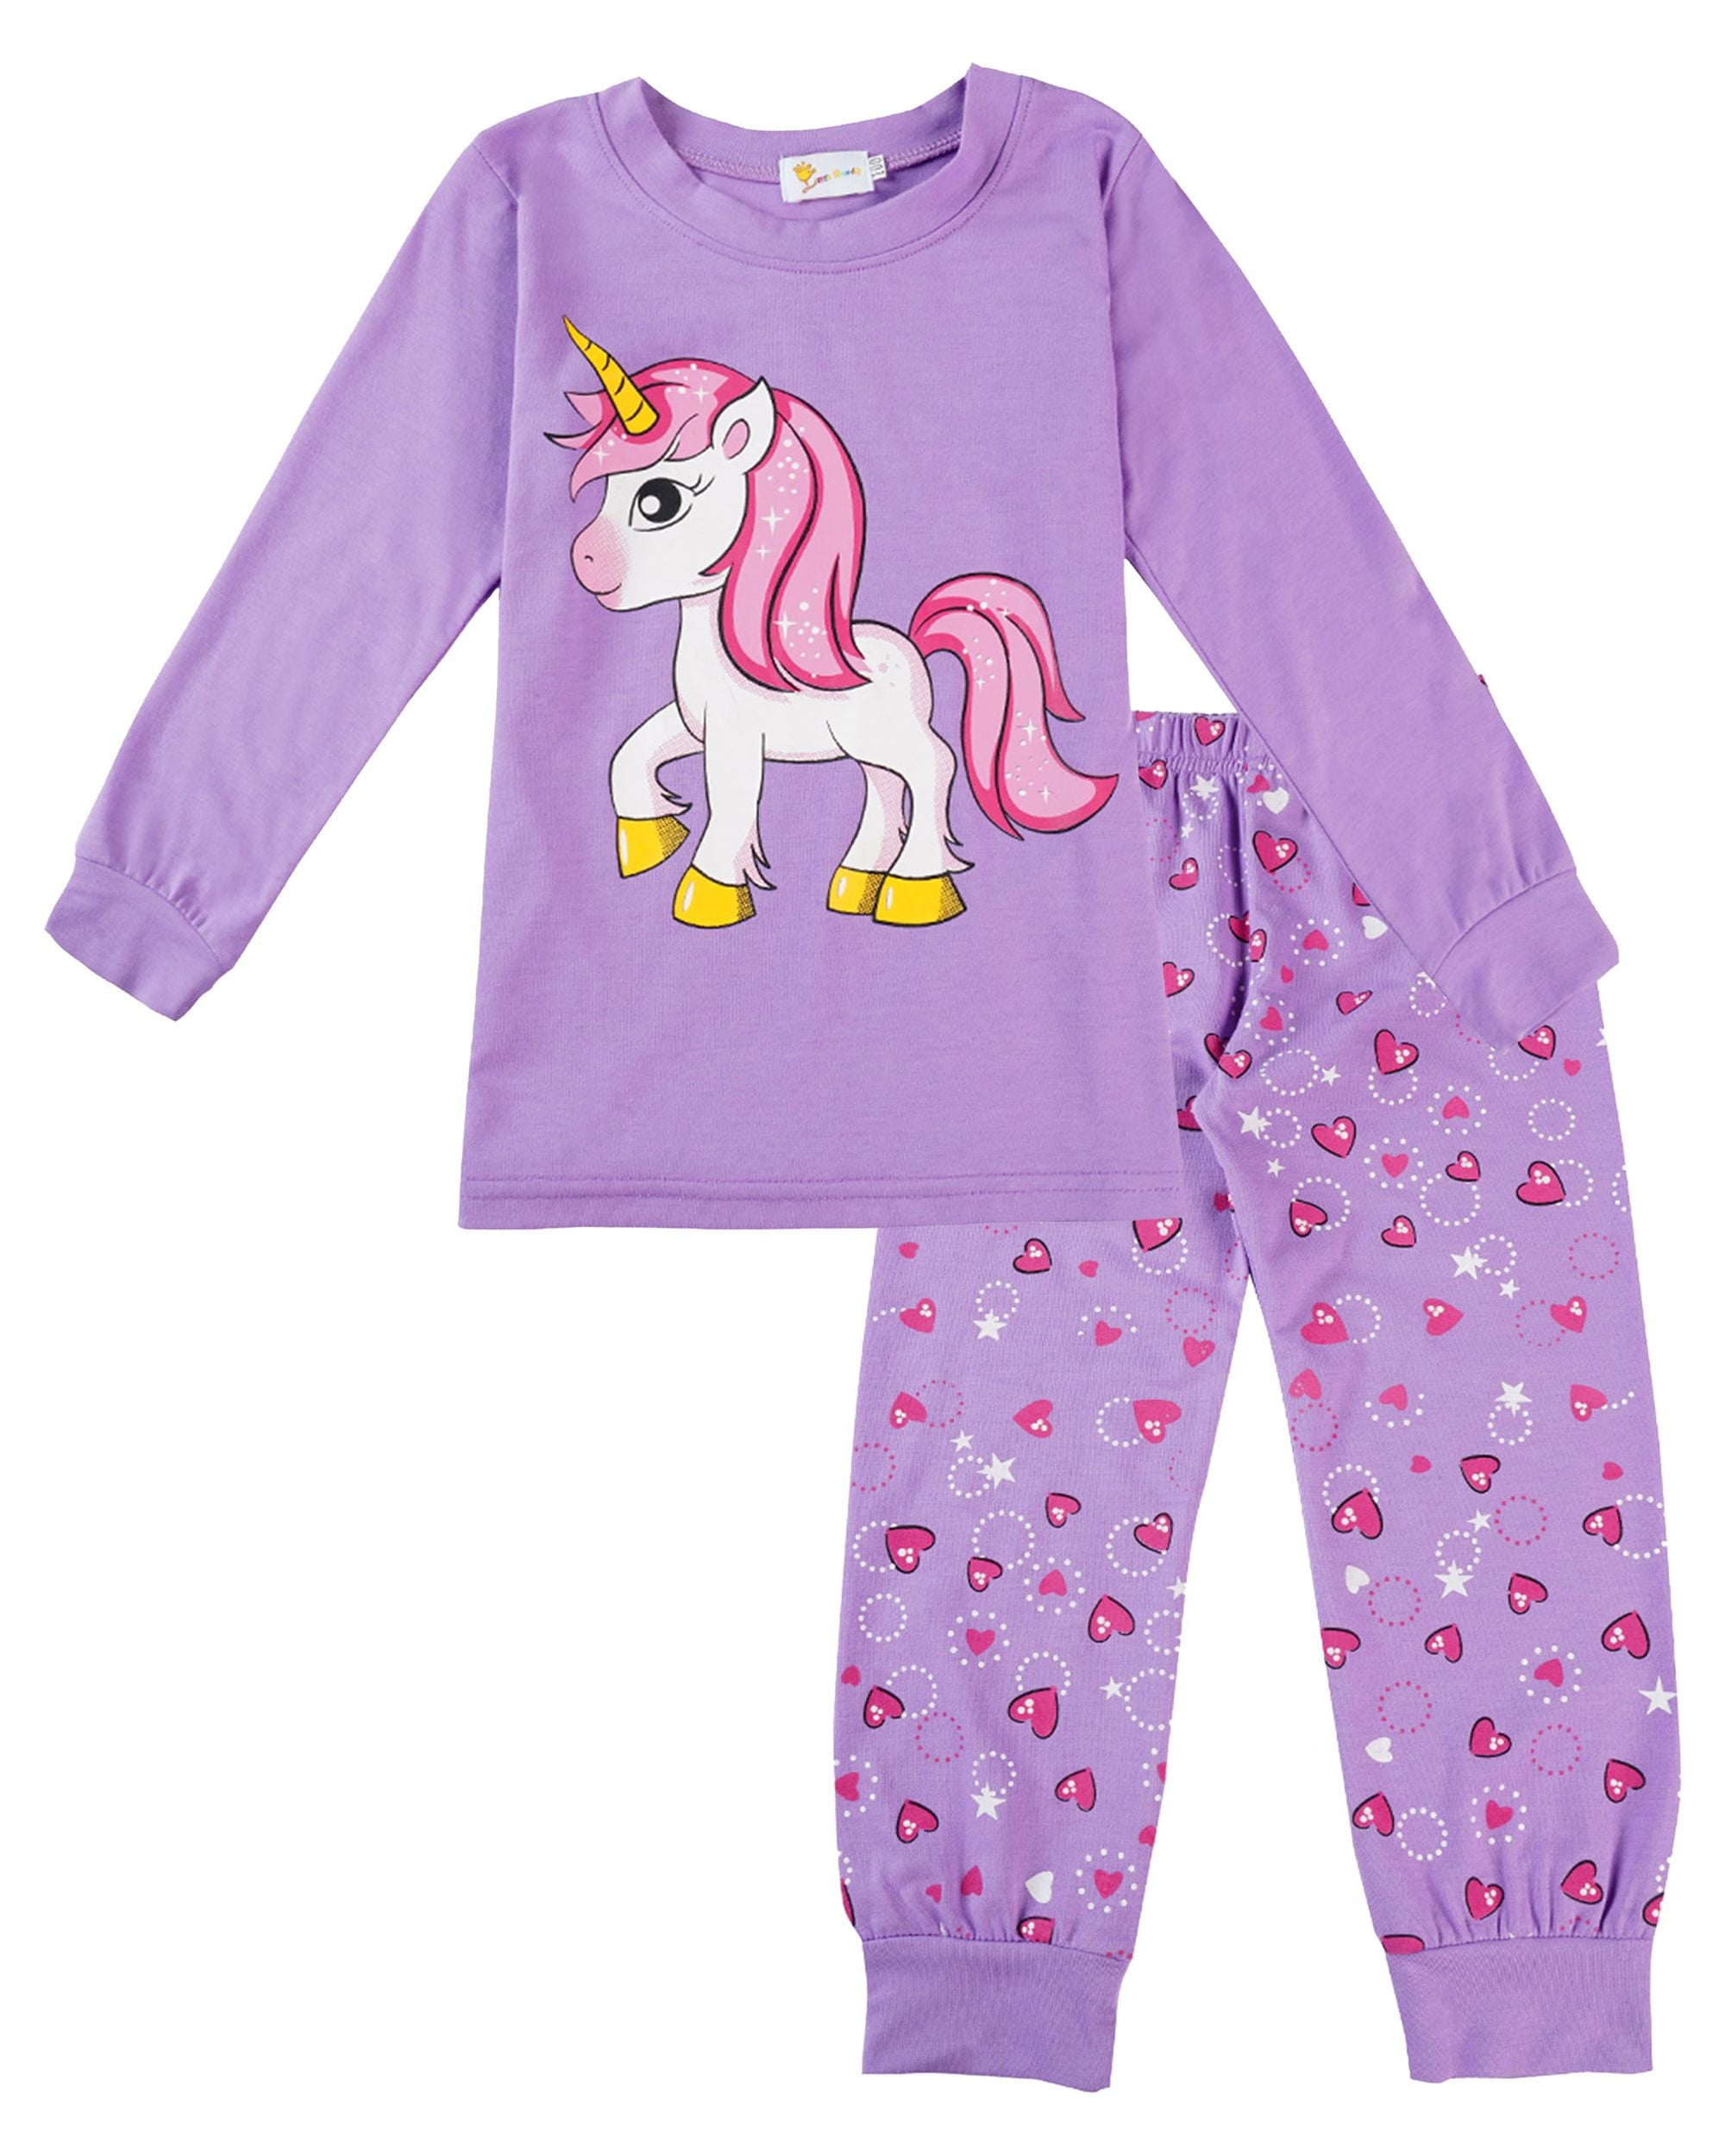 Little Hand Girls Pajamas Sets Purple Unicorn 100% Cotton Long Sleeve ...